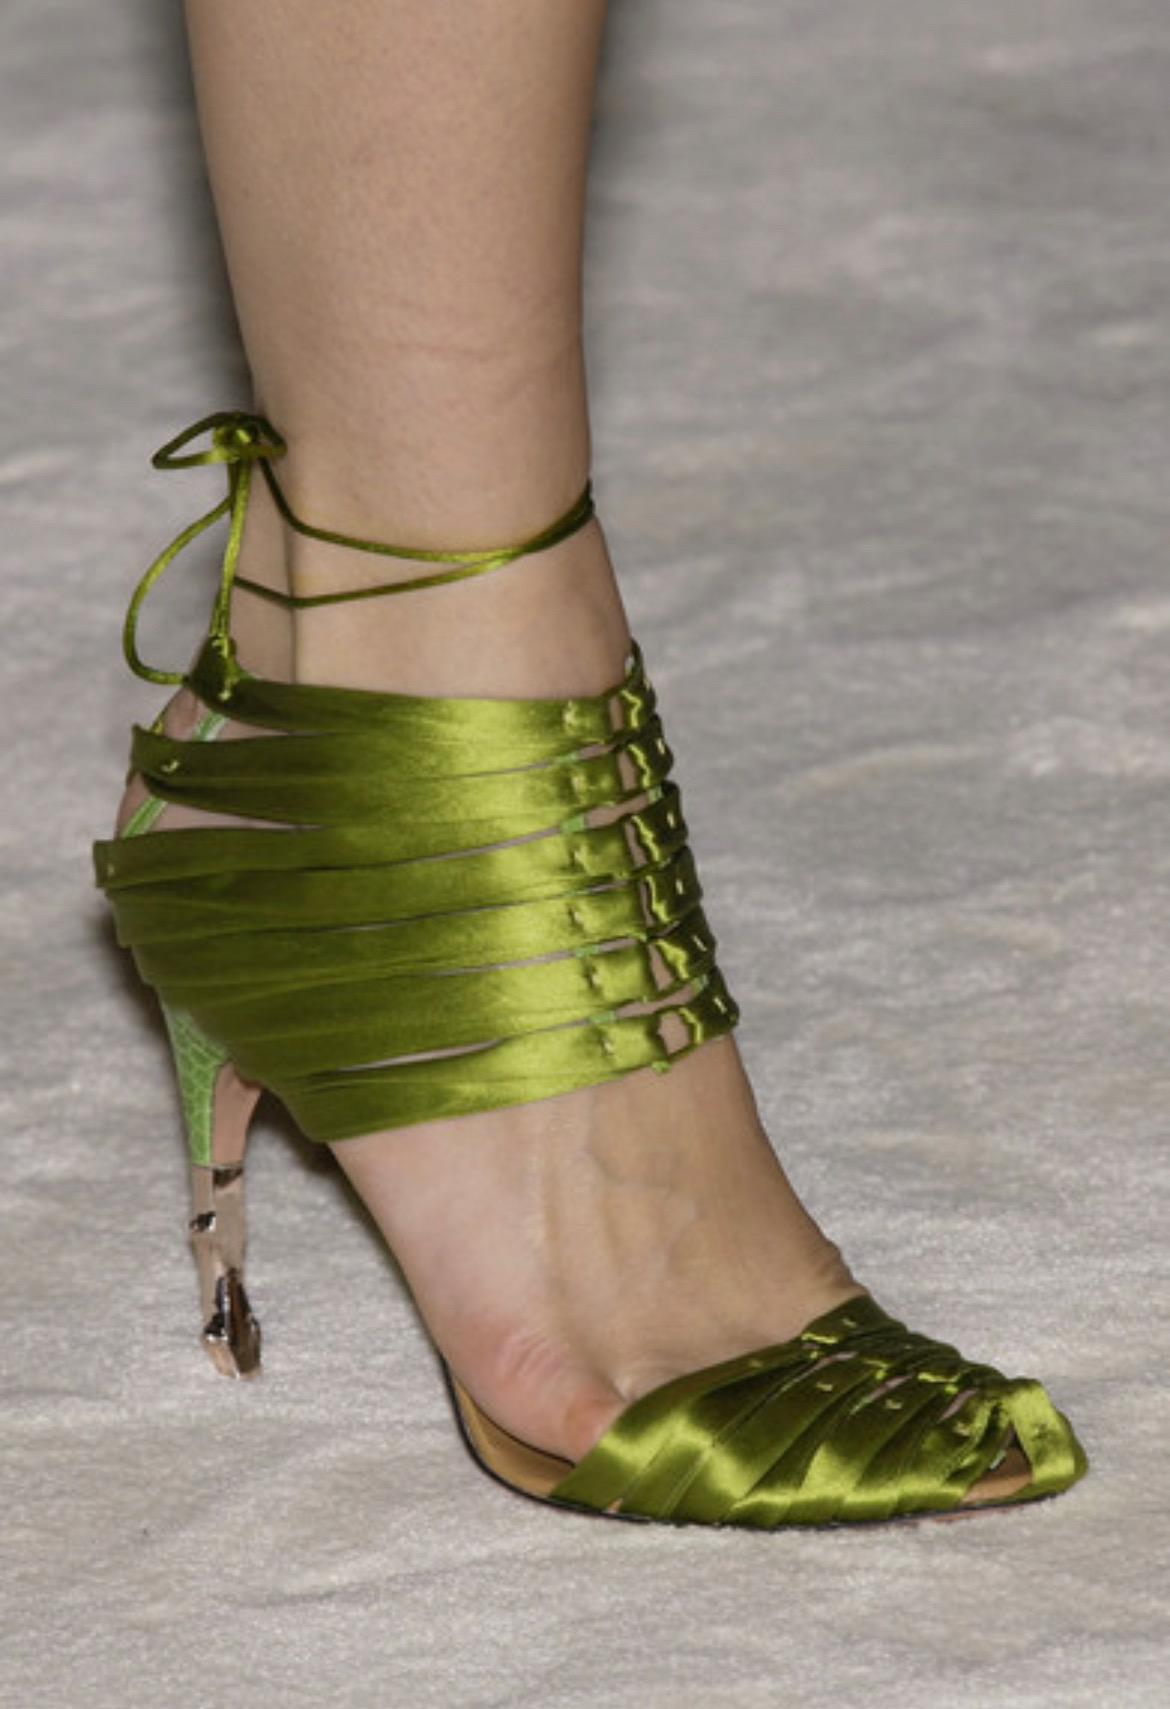 tom ford green heels